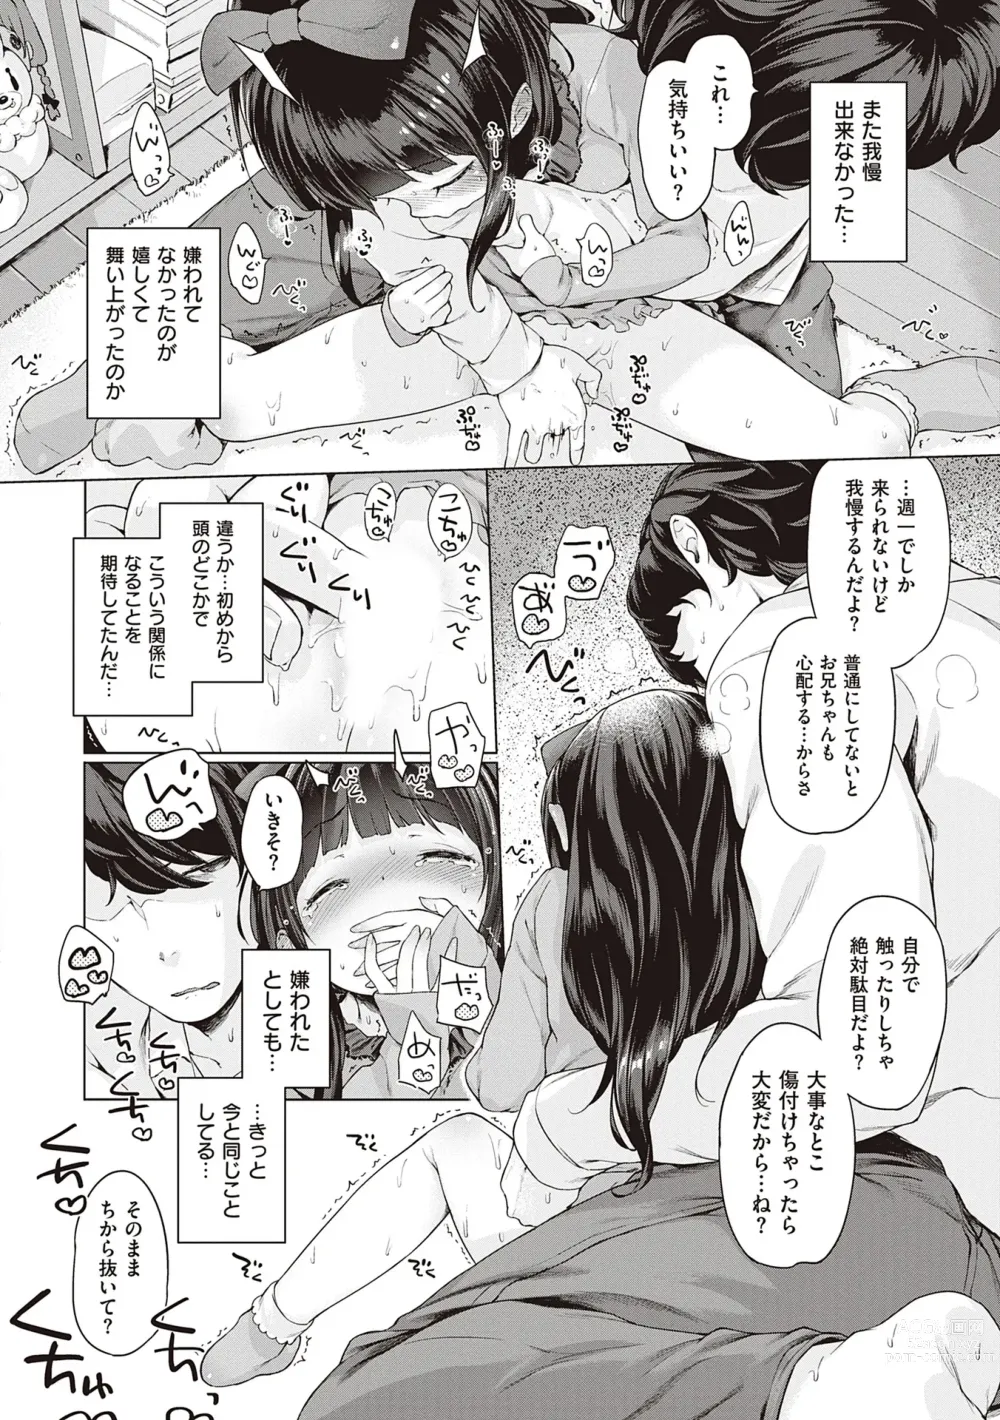 Page 28 of manga Motto! Hatsukoi Ribbon.